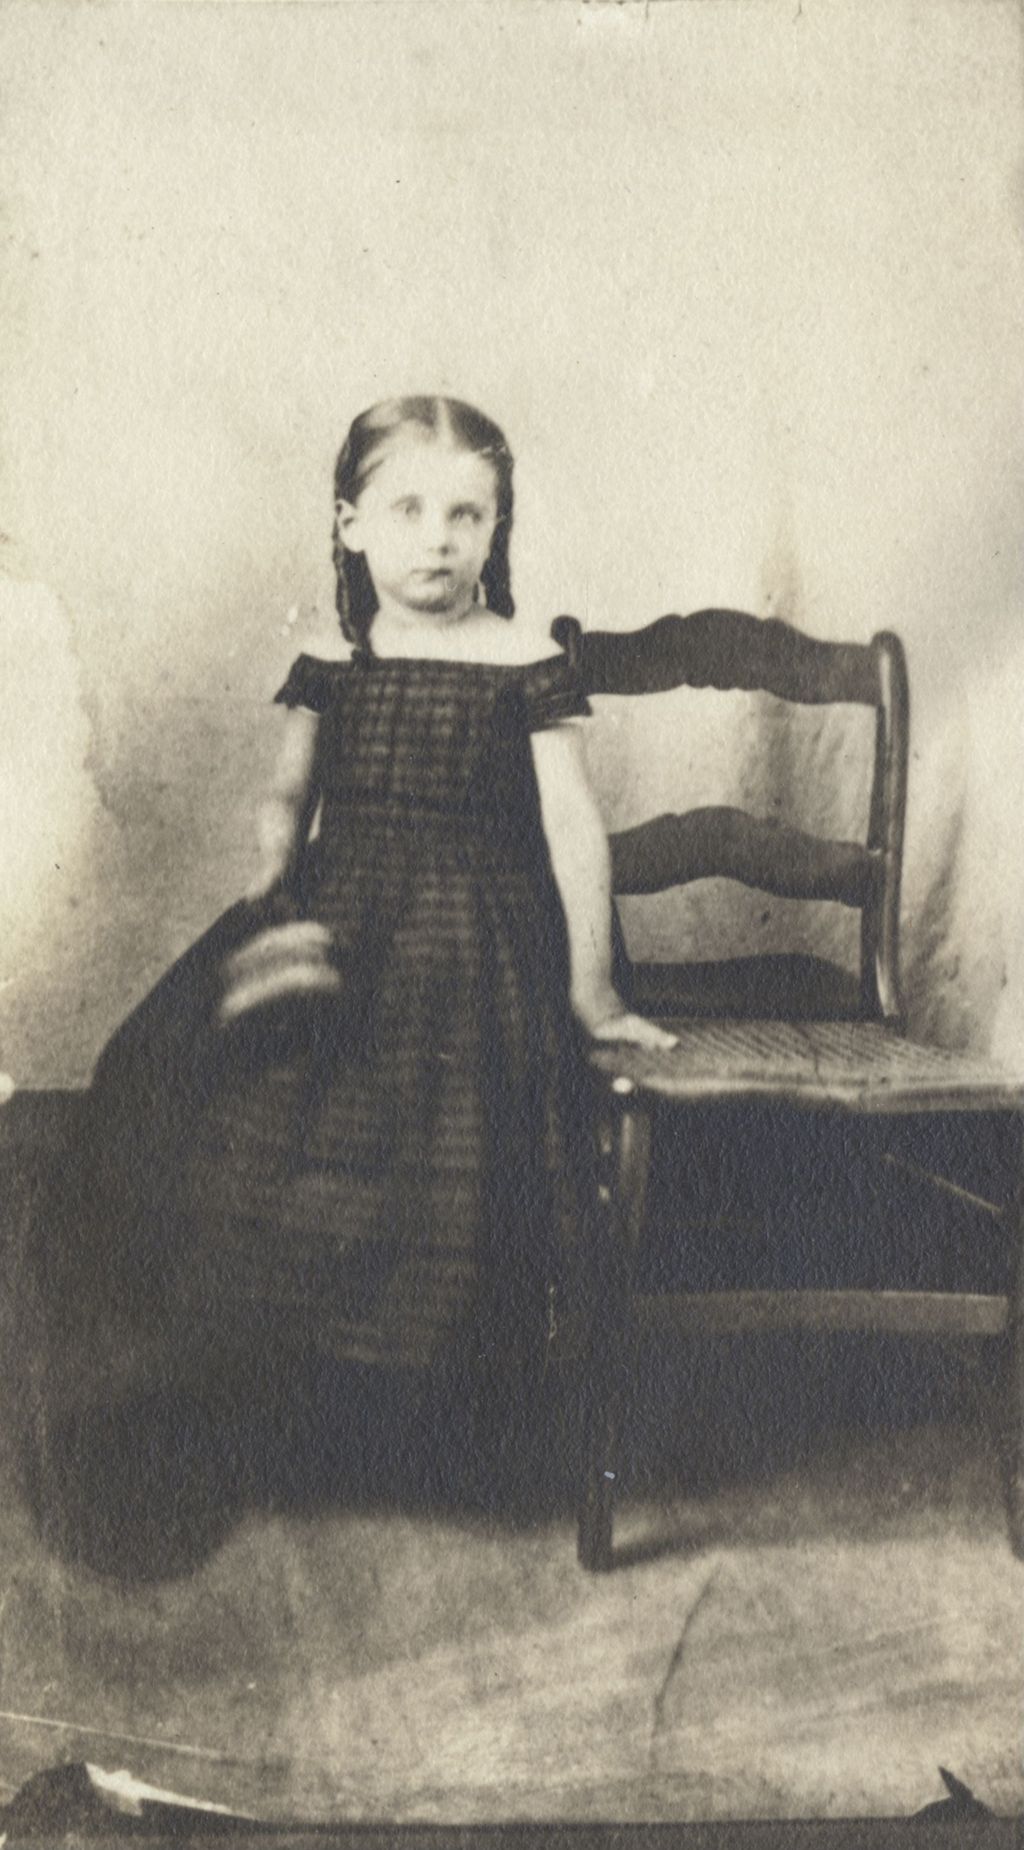 Portrait of Jane Addams at age 4